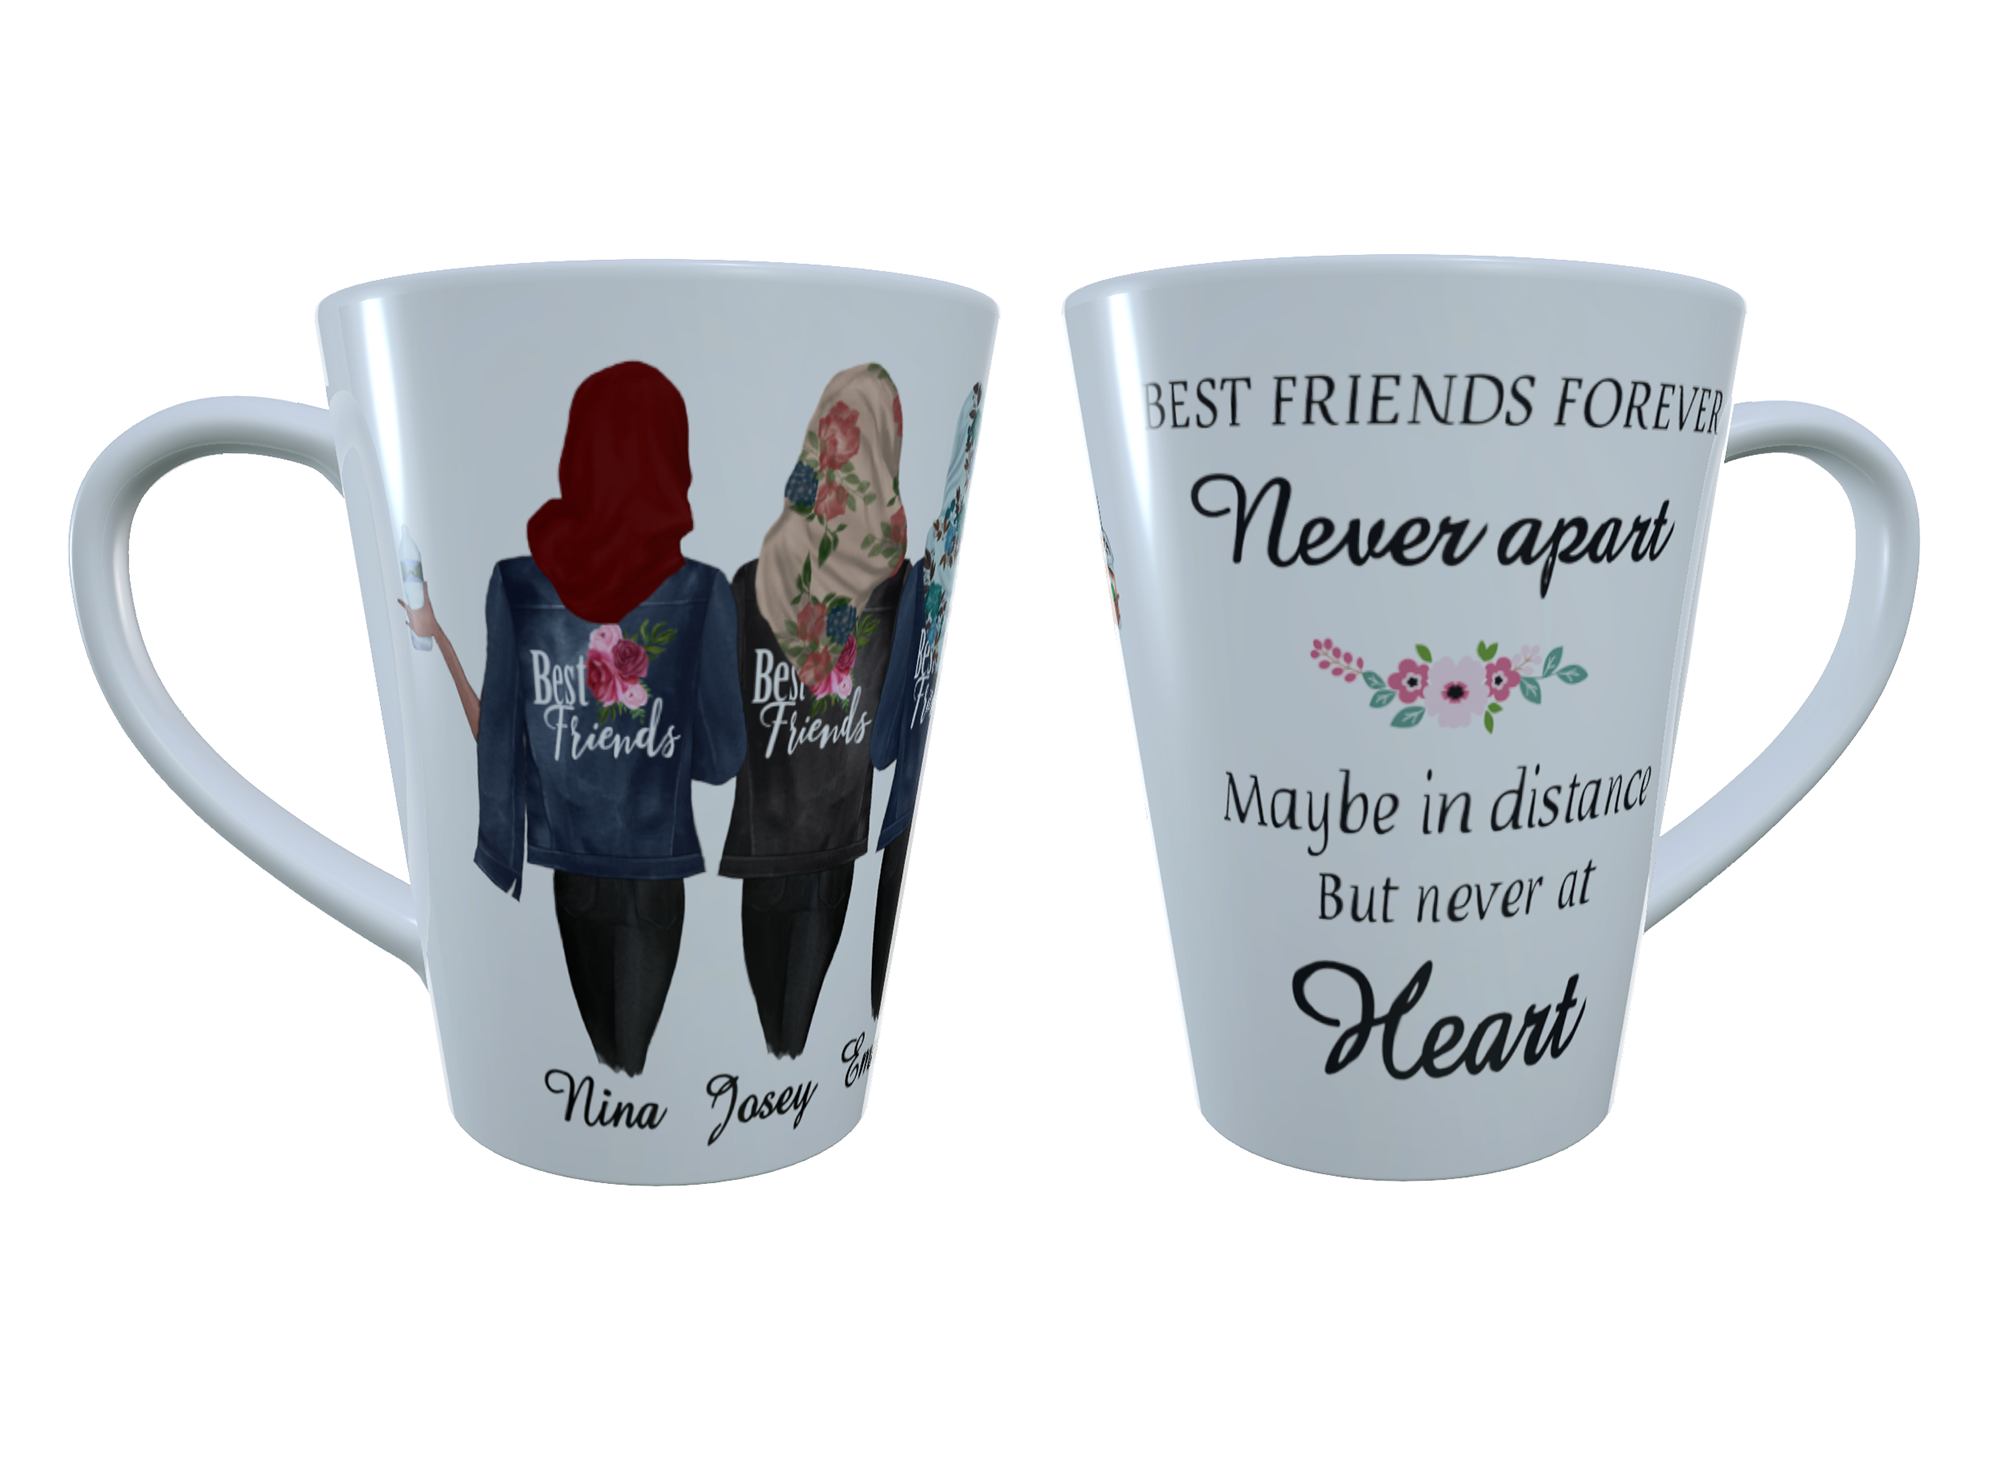 Hijabi Best Friends Forever Personalized Ceramic Latte Mug